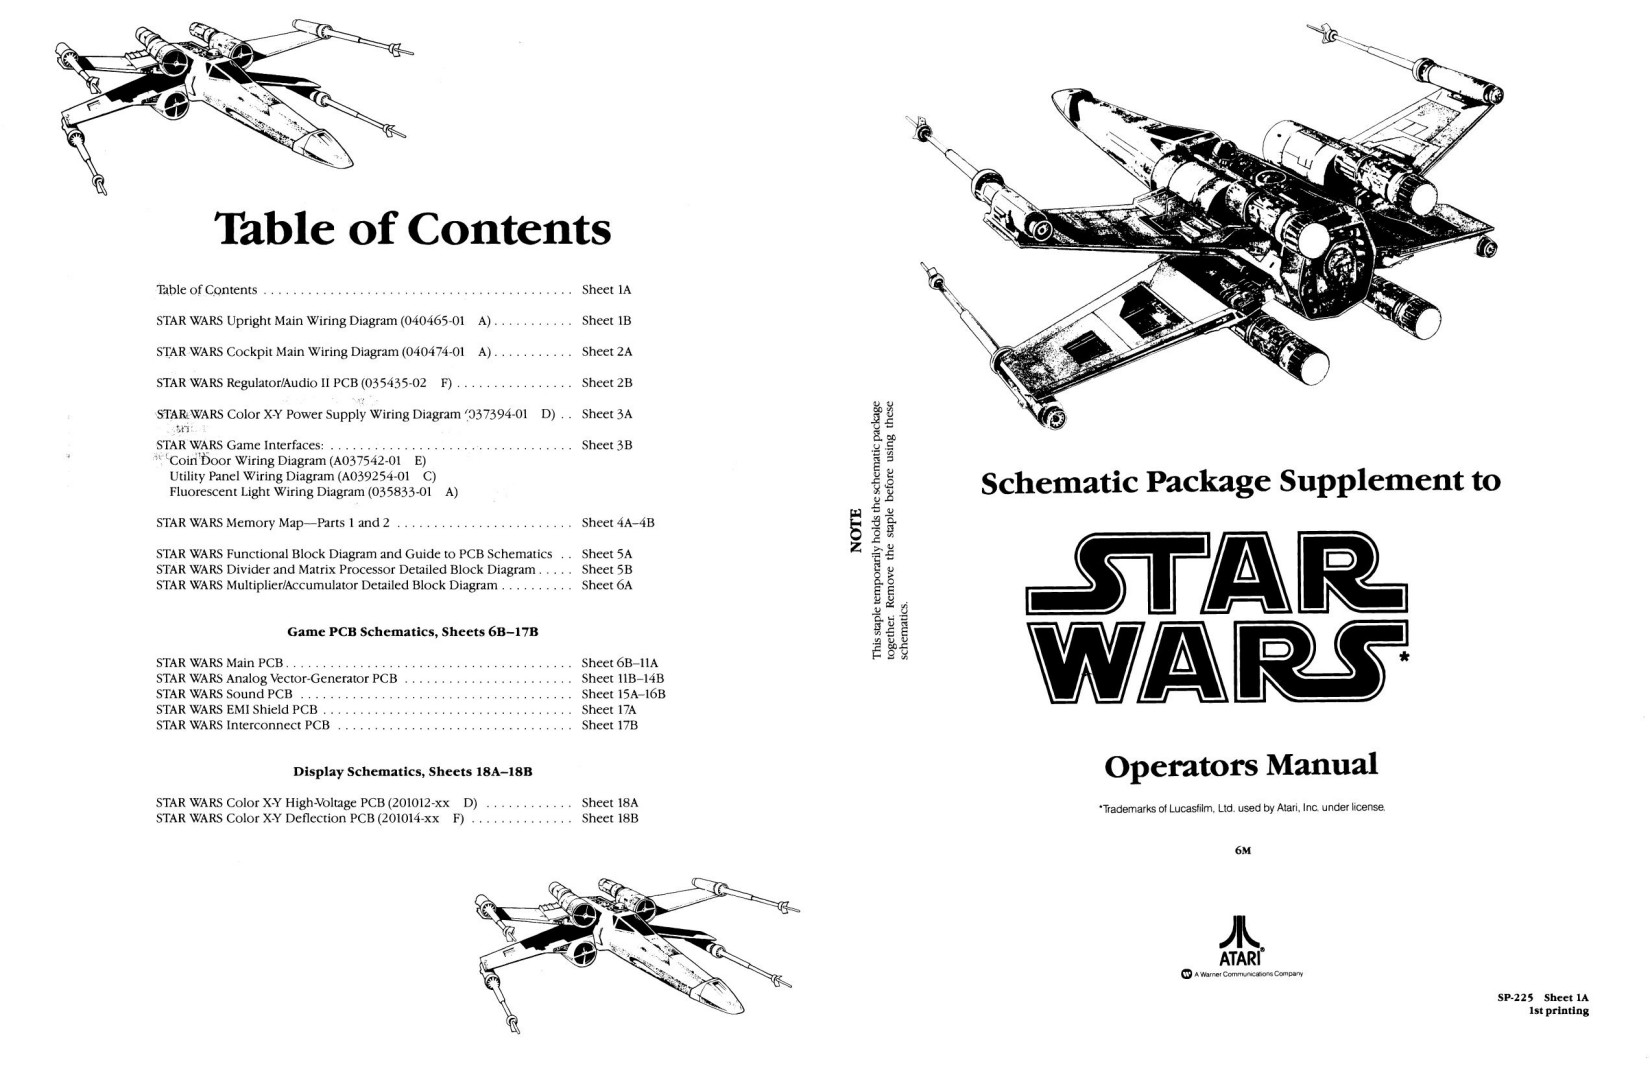 Star Wars SP-225 1st Printing